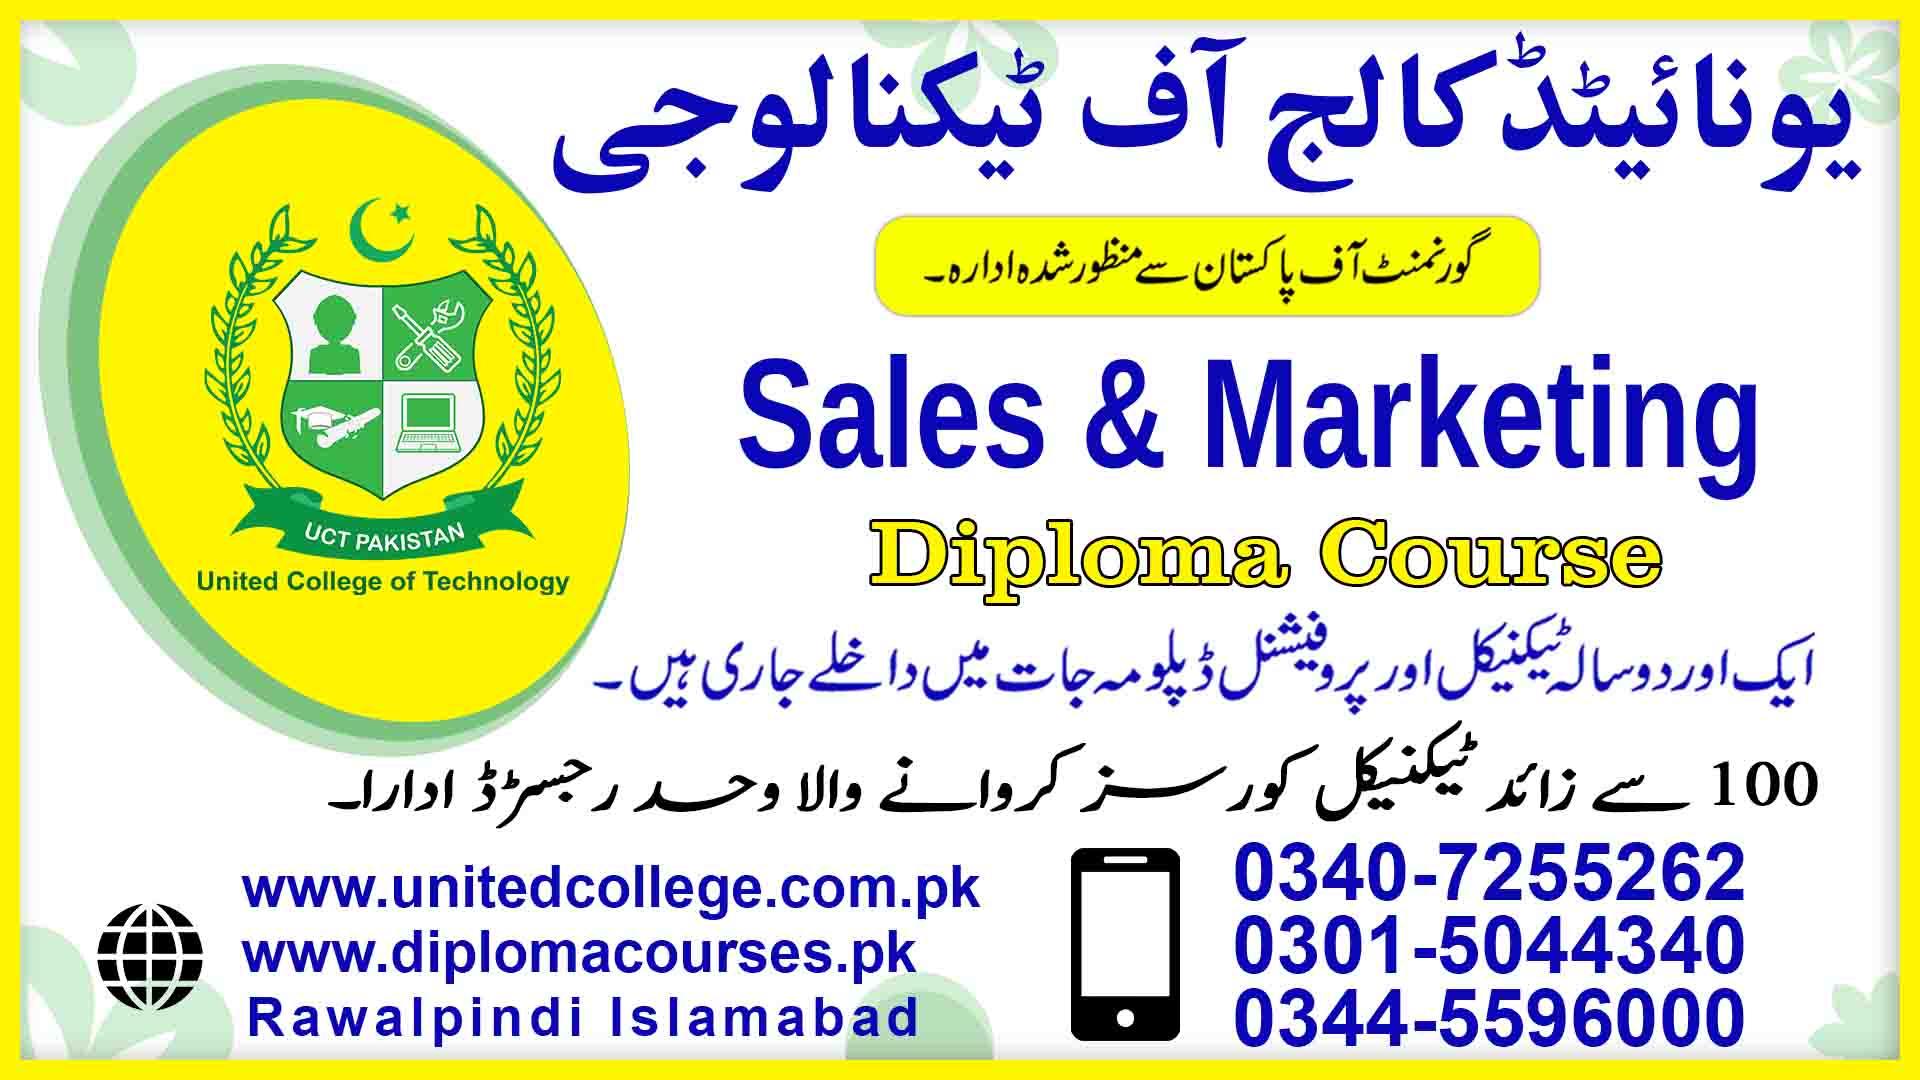 Sales and Marketing COURSE IN RAWALPINDI ISLAMABAD PAKISTAN